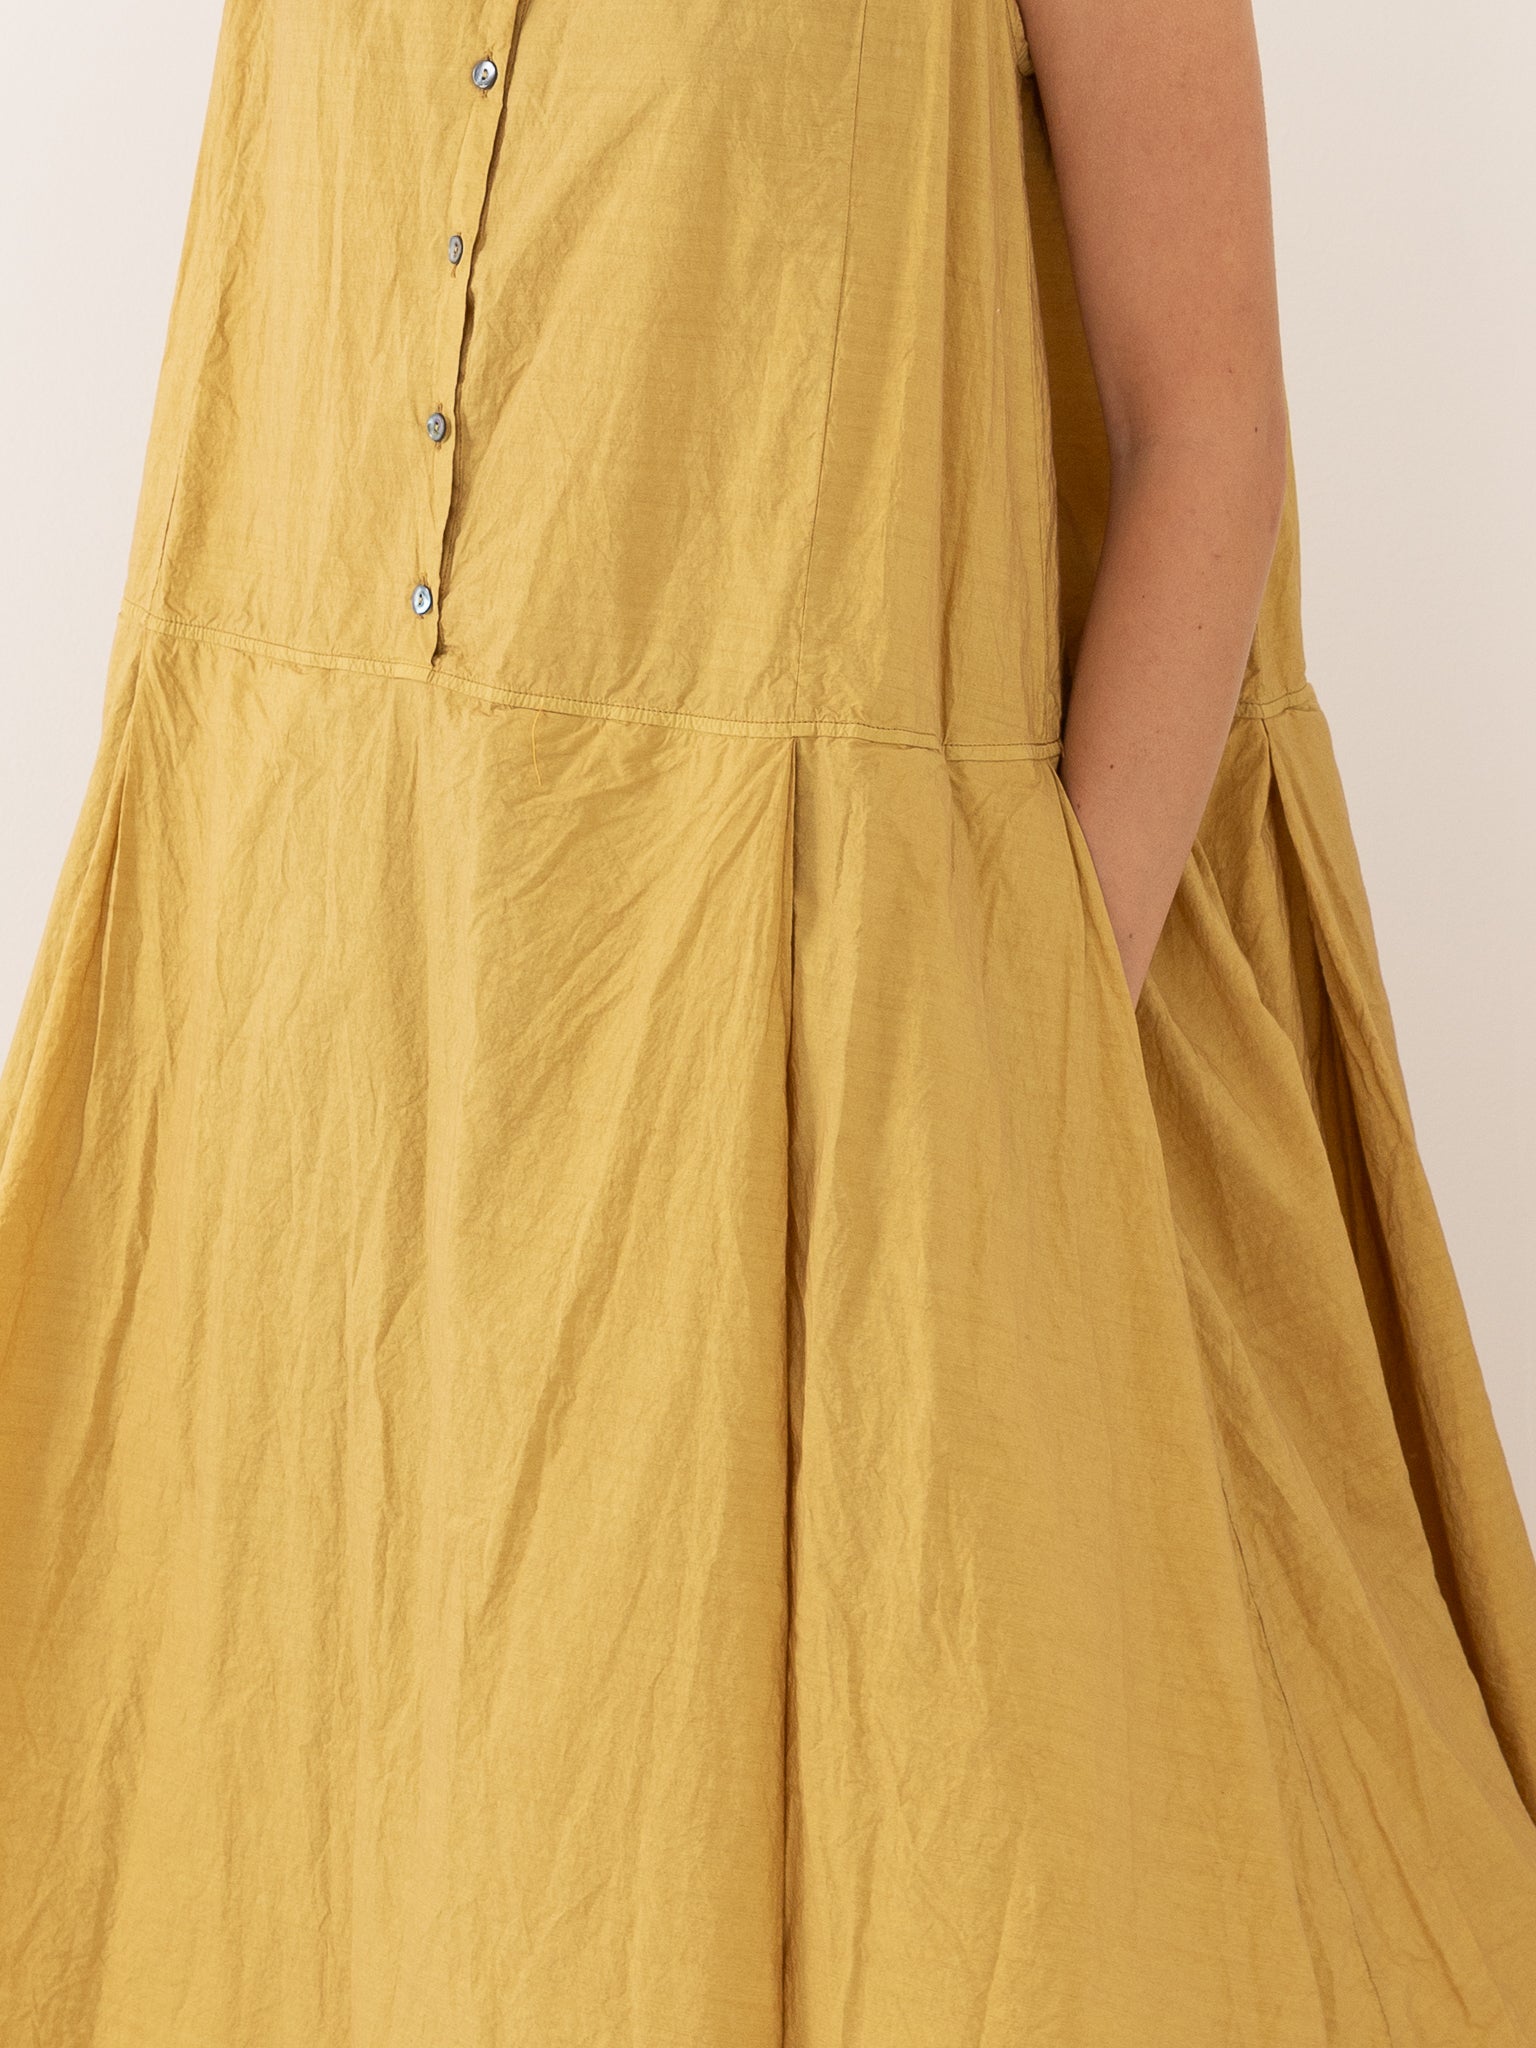 Album Di Famiglia Sleeveless Dress, Sun Yellow - Worthwhile, Inc.